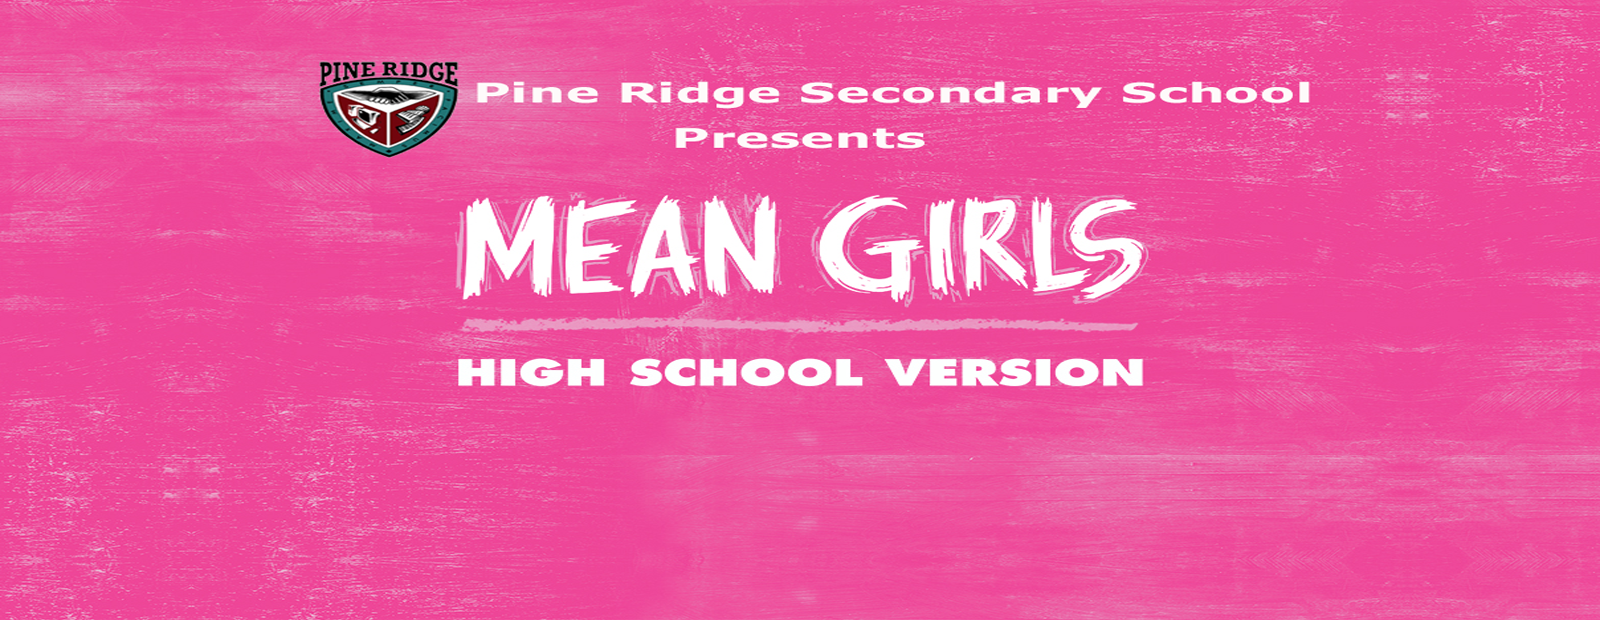 Mean Girls the High School Musical